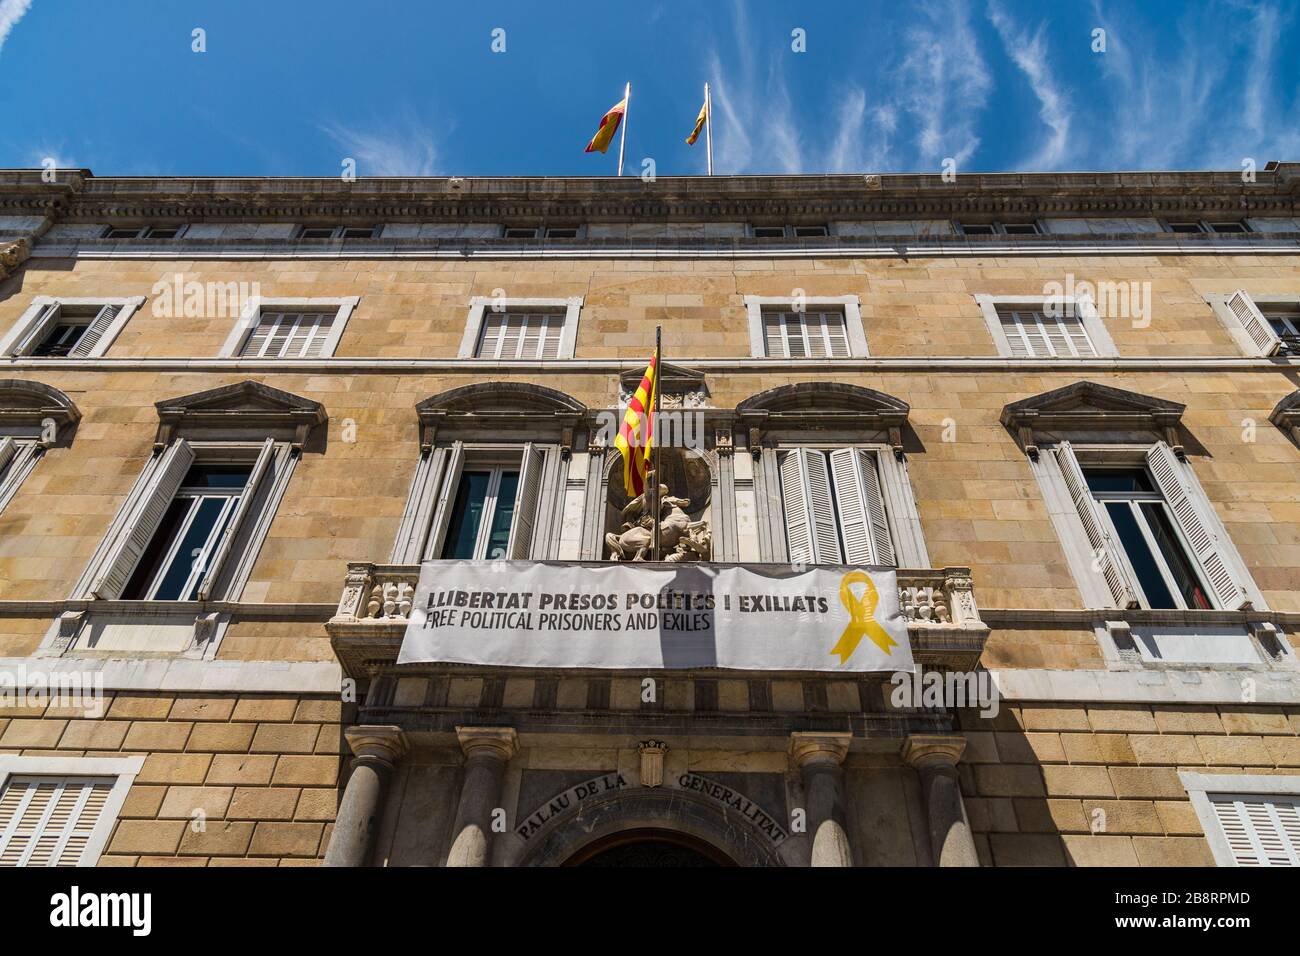 Barcelona, Spain - August 1, 2019: Administrative building in Barcelona Stock Photo